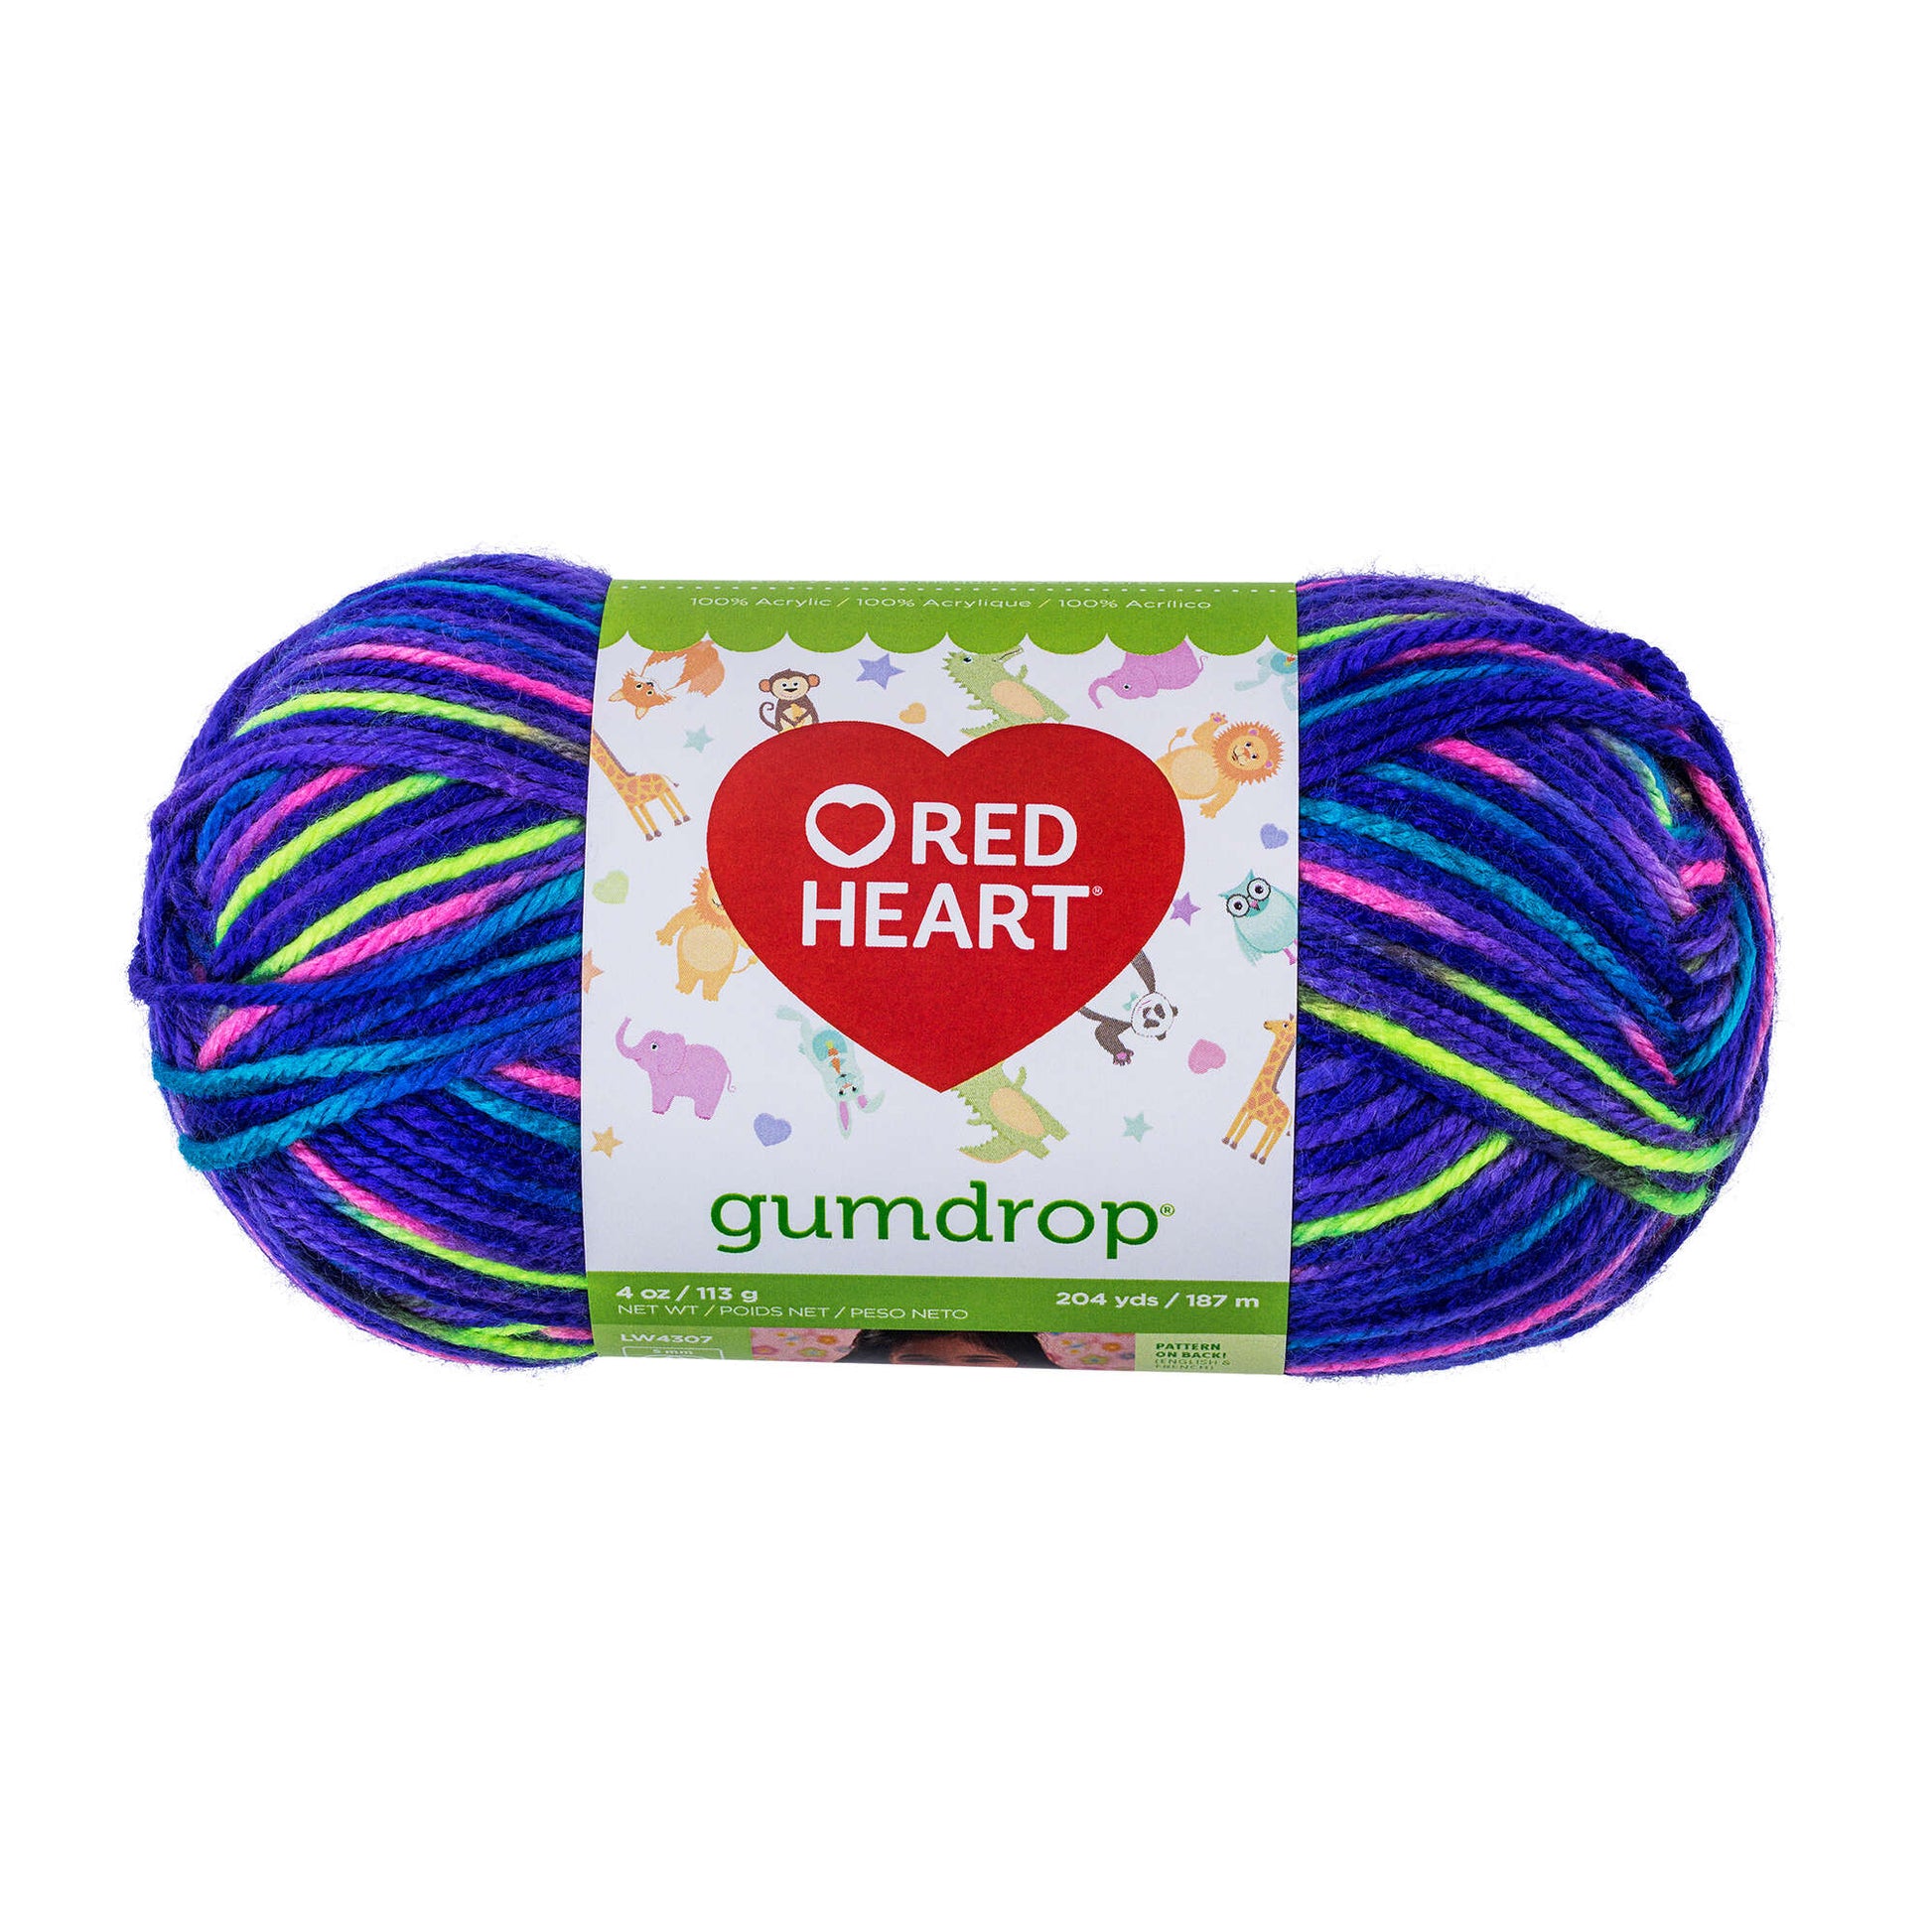 Red Heart Gumdrop Yarn - Discontinued shades